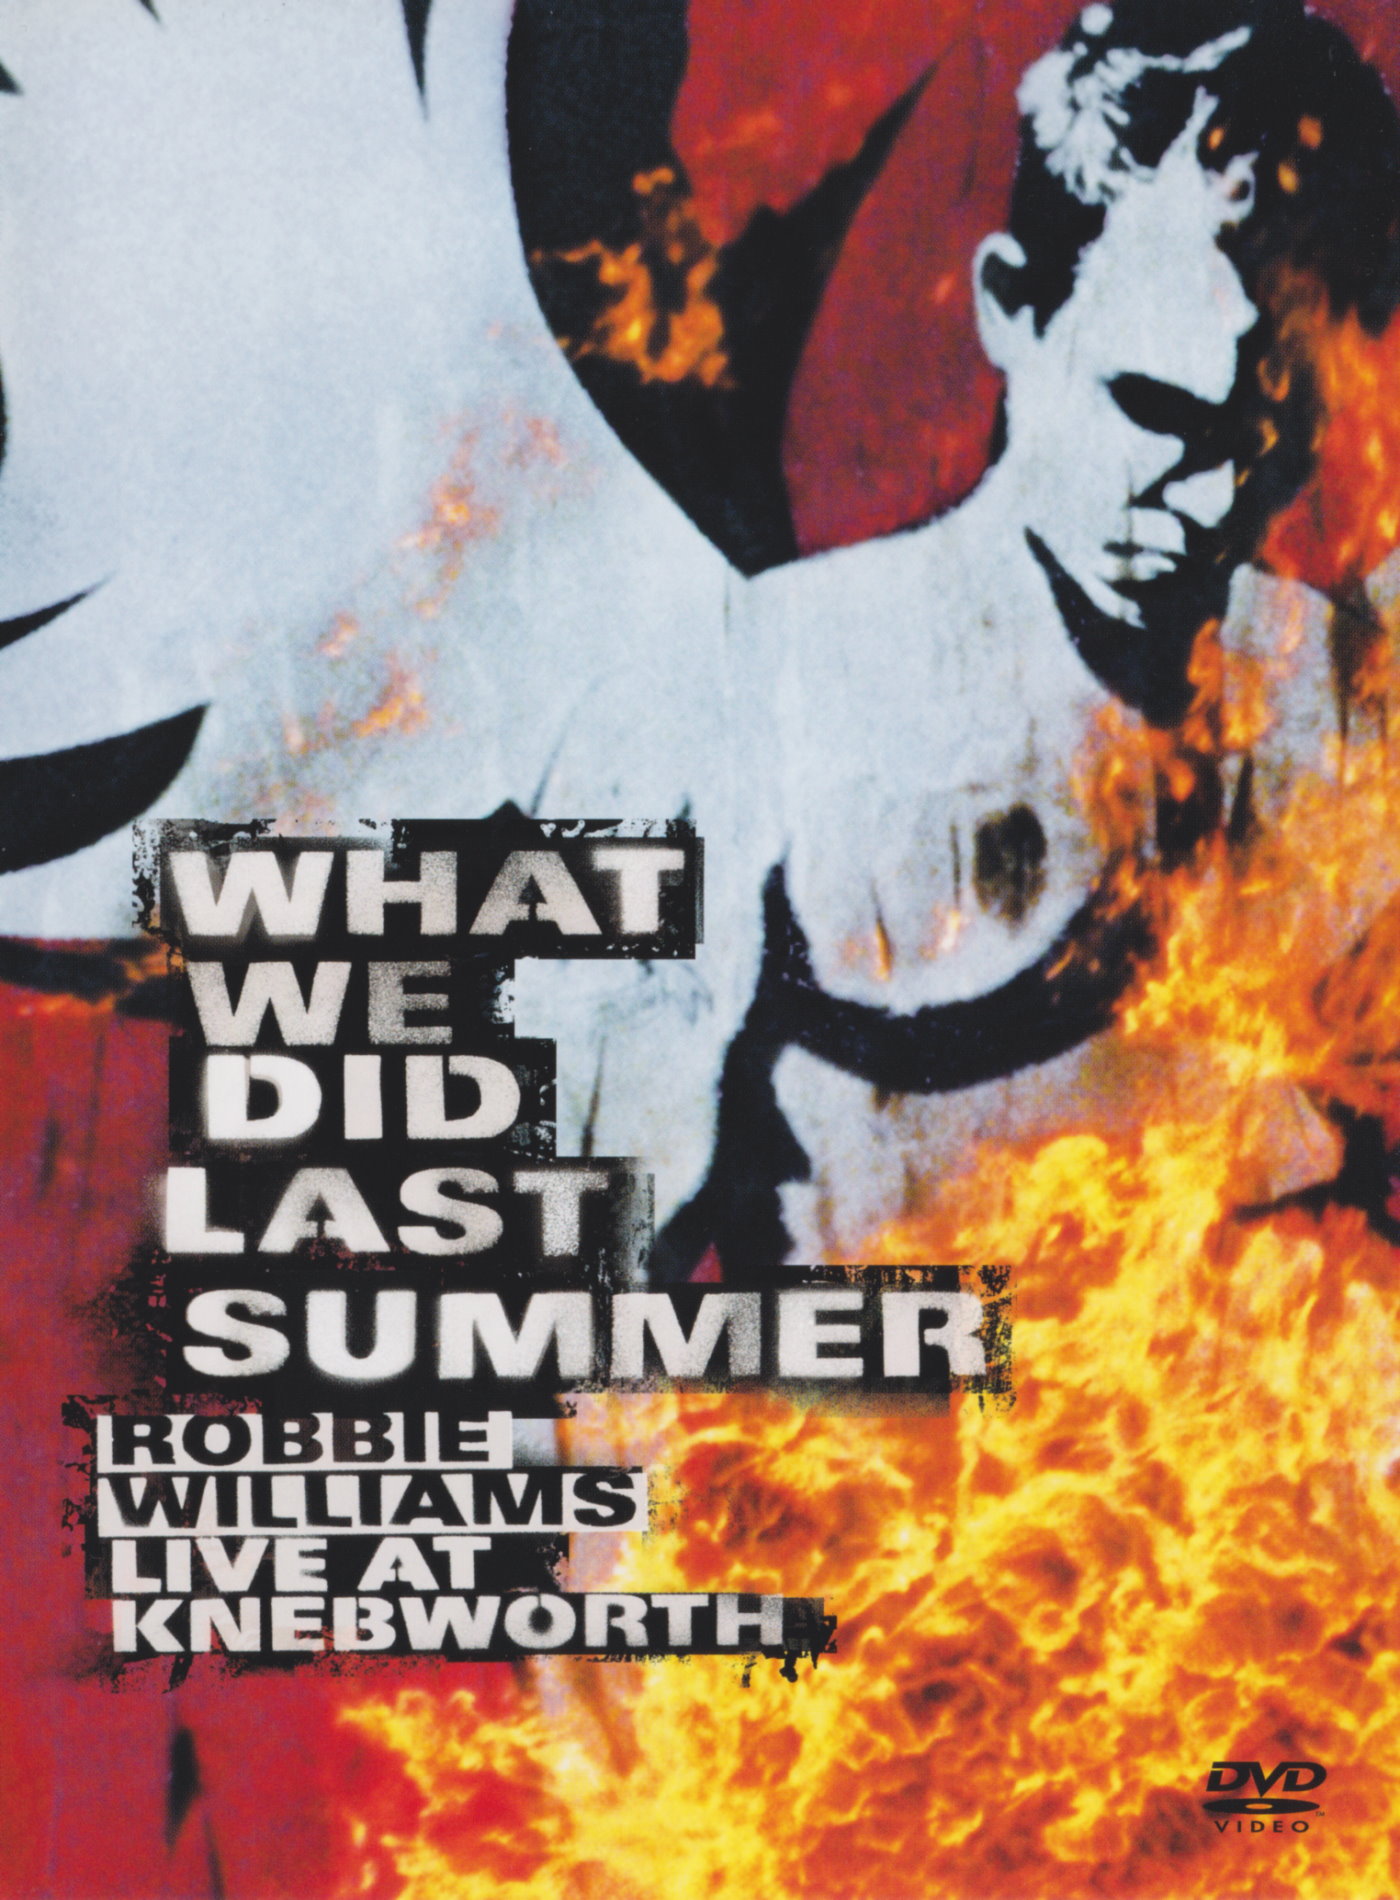 Cover - Robbie Williams - What We Did Last Summer.jpg